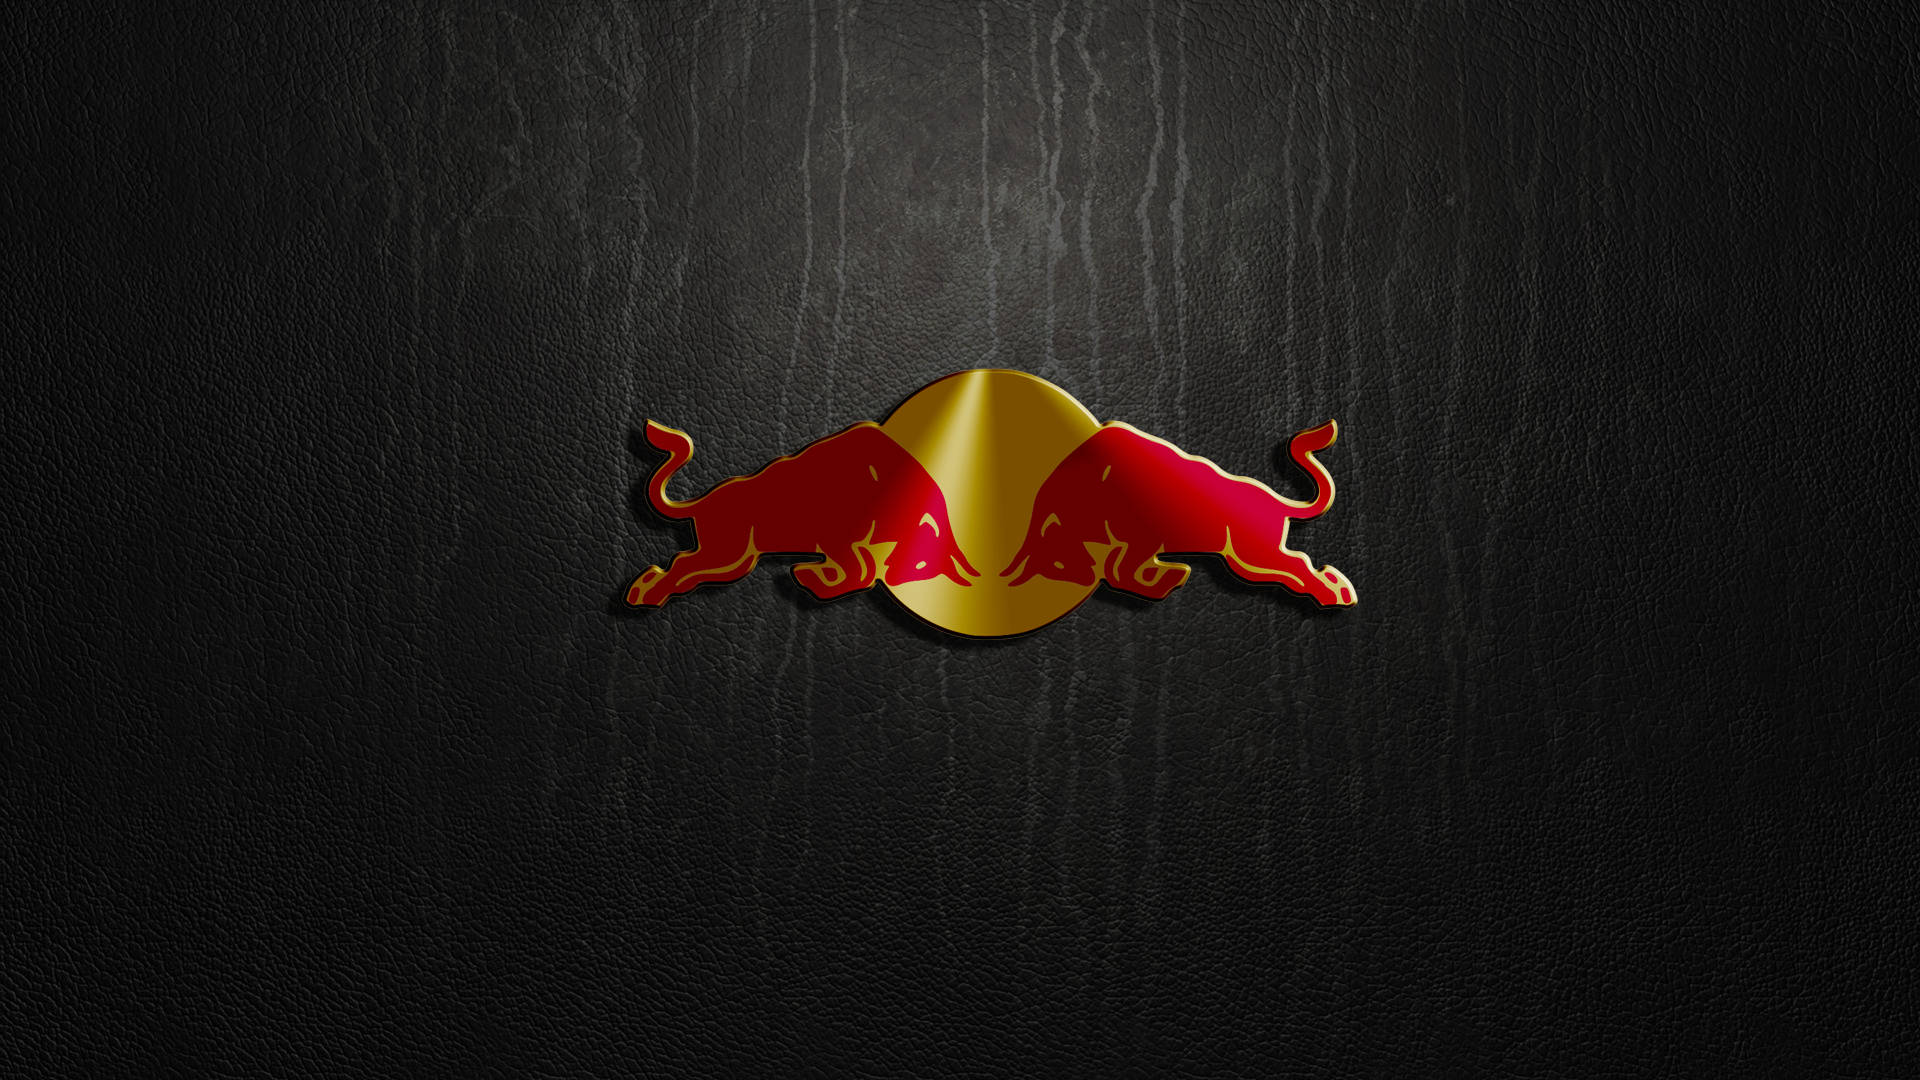  Red Bull Hintergrundbild 1920x1080. Red Bull F1 Picture